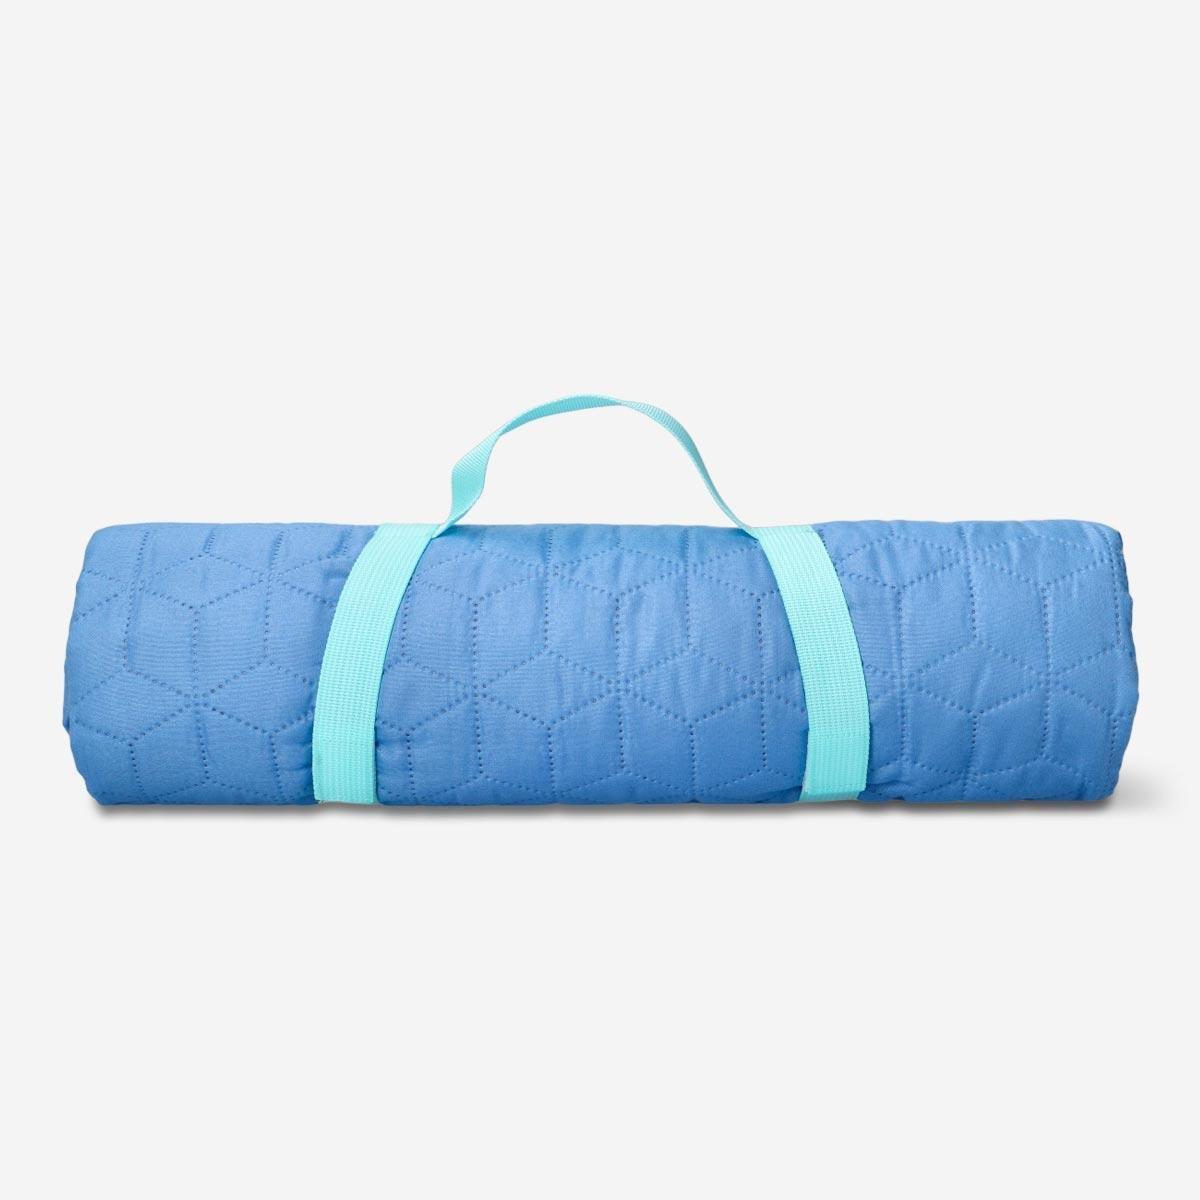 Blue picnic blanket